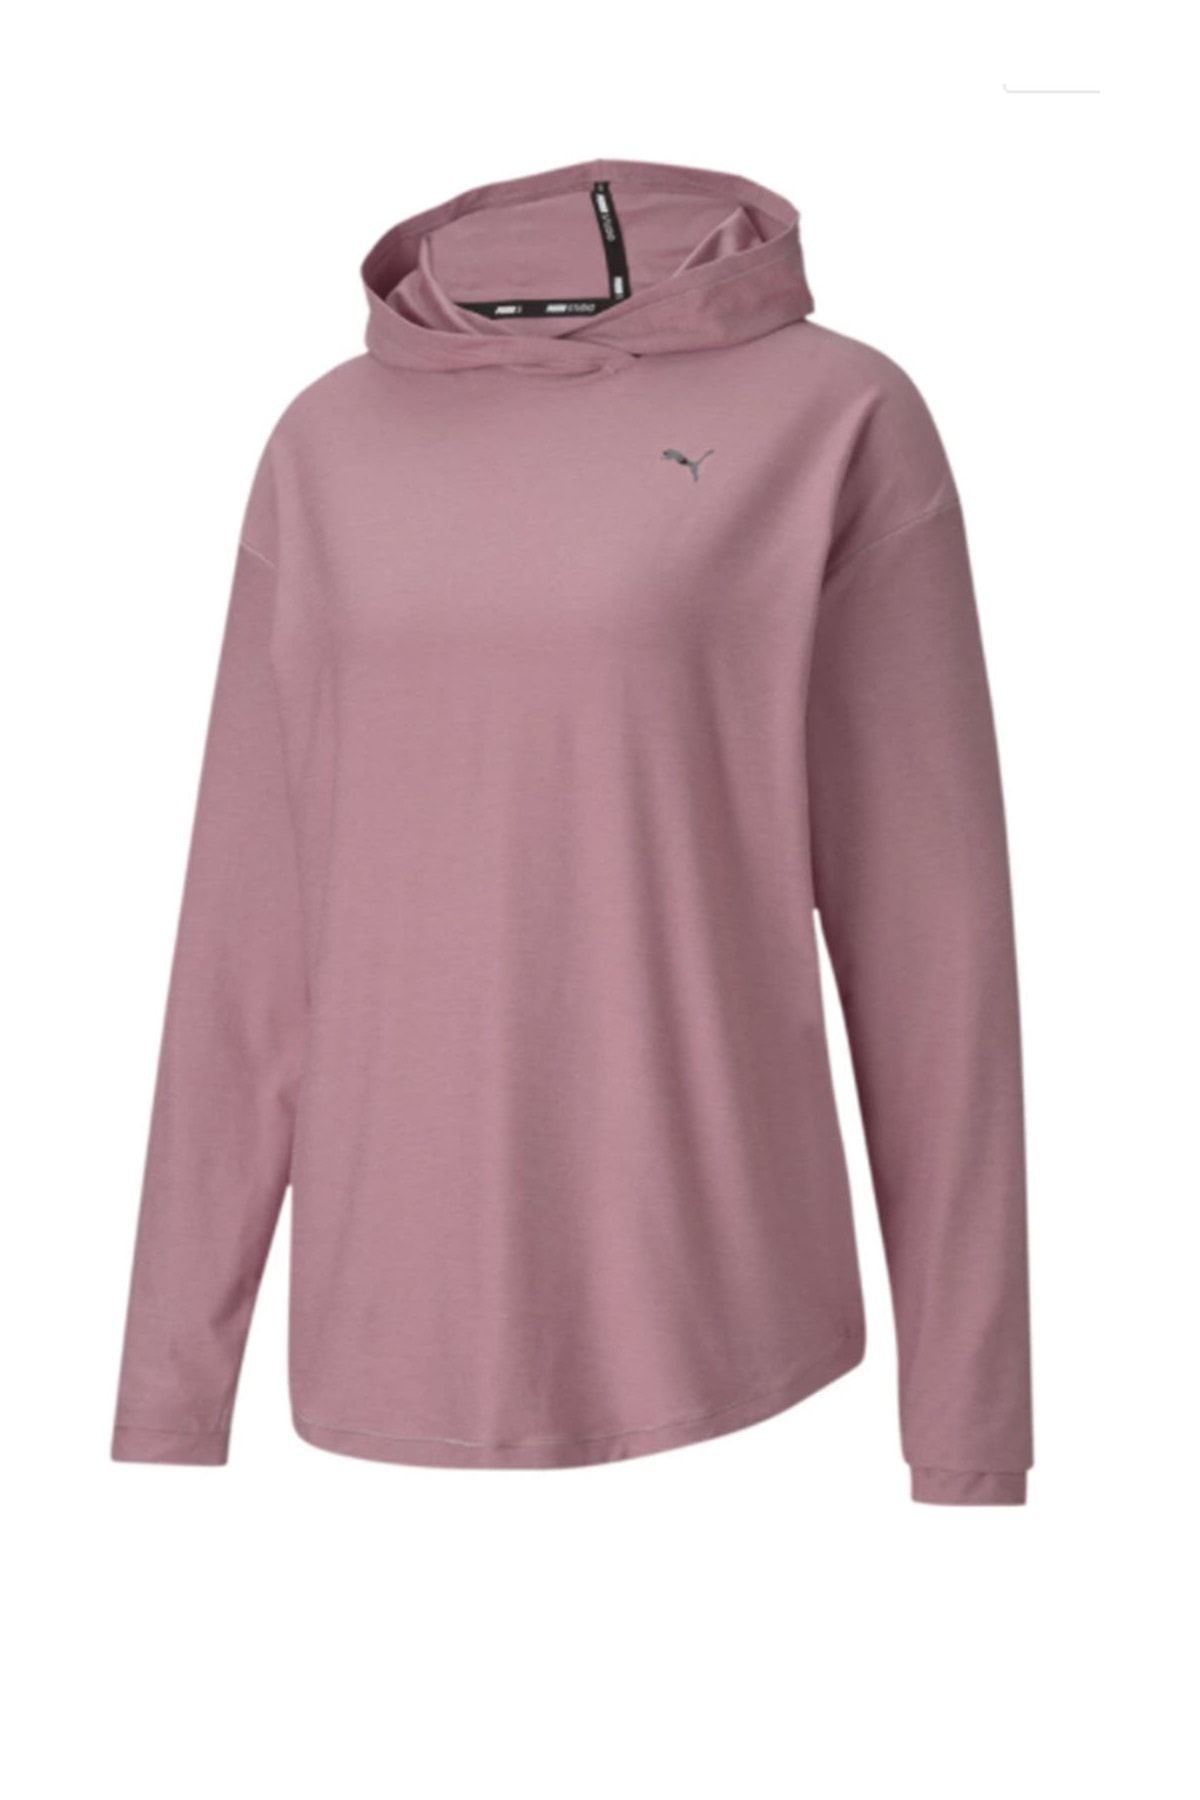 Puma Kadın Spor Sweatshirt - Studio Knit Foxglove Heather - 51951301